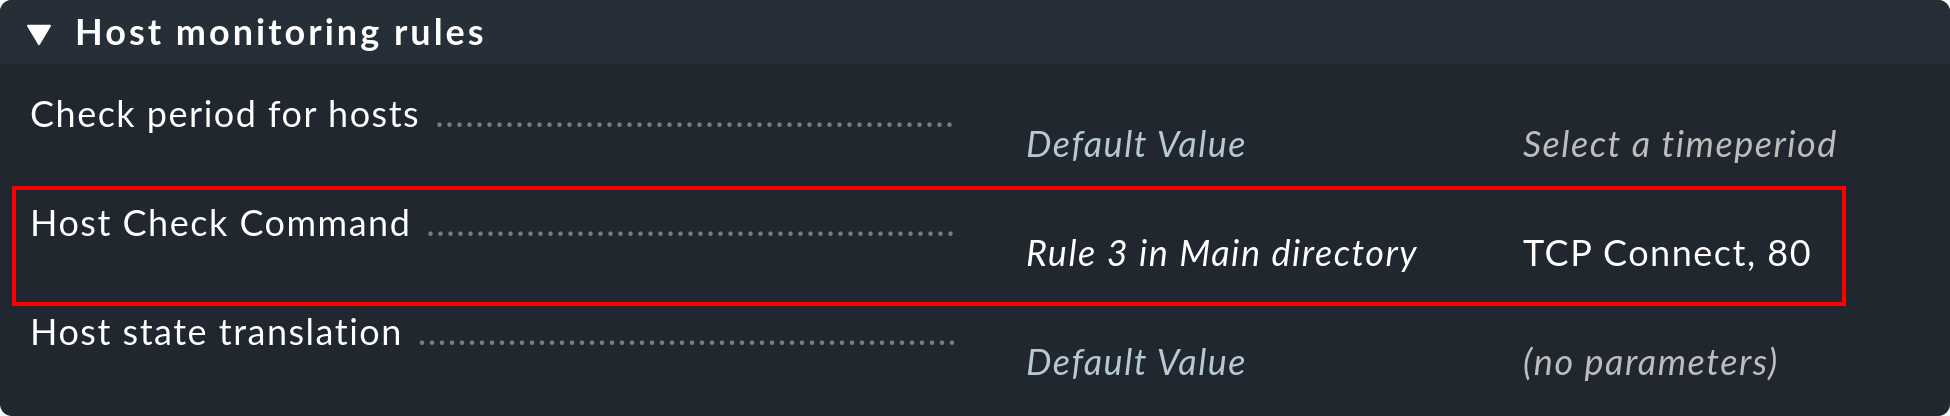 wato rules host rule sets2